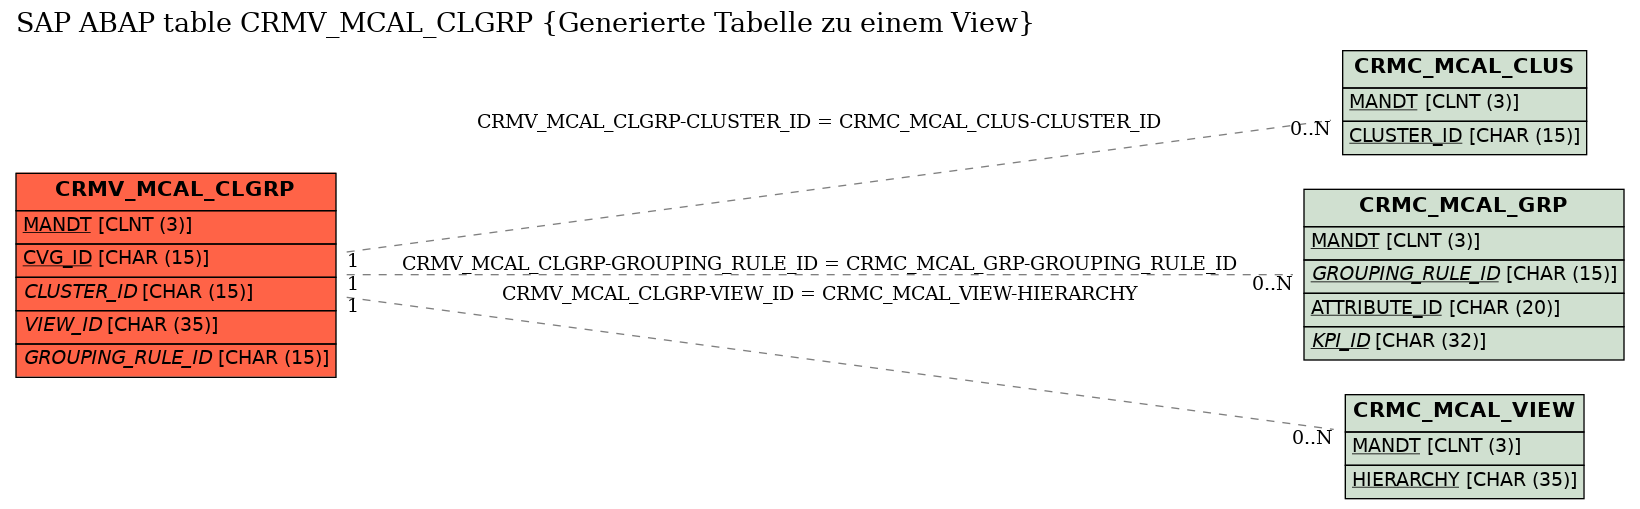 E-R Diagram for table CRMV_MCAL_CLGRP (Generierte Tabelle zu einem View)